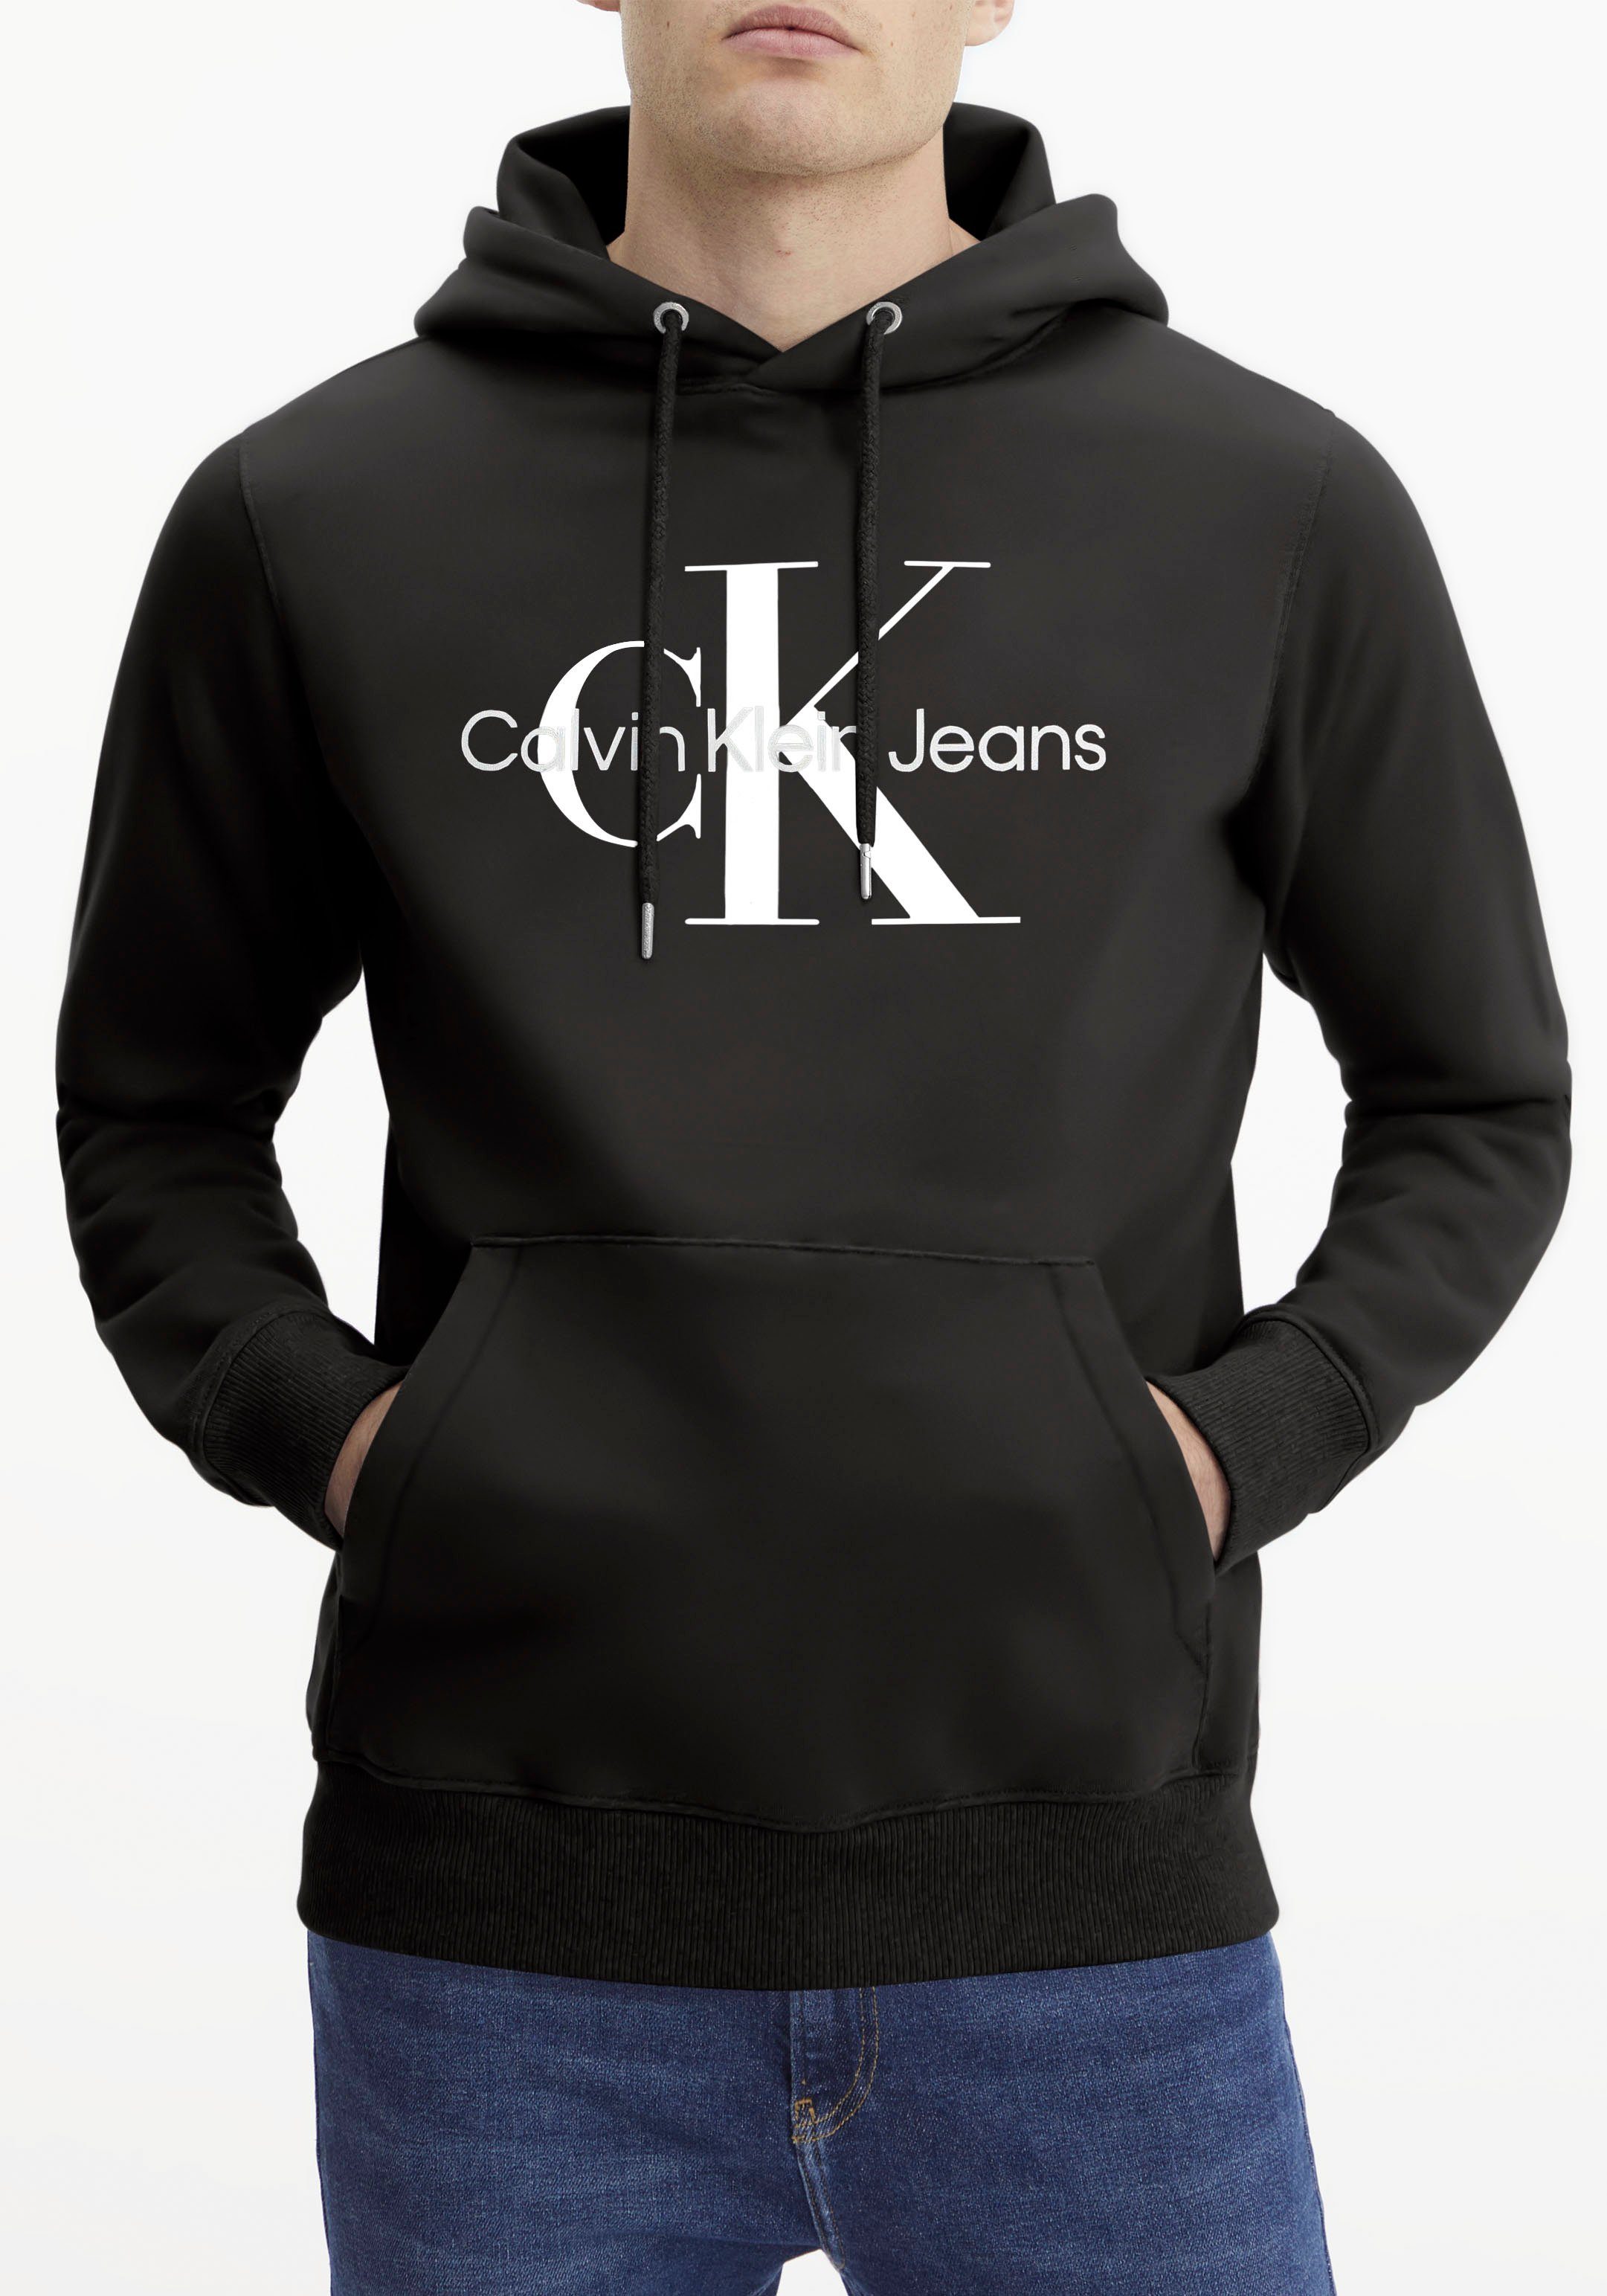 Calvin Klein Jeans Ck CORE Black Kapuzensweatshirt HOODIE MONOGRAM